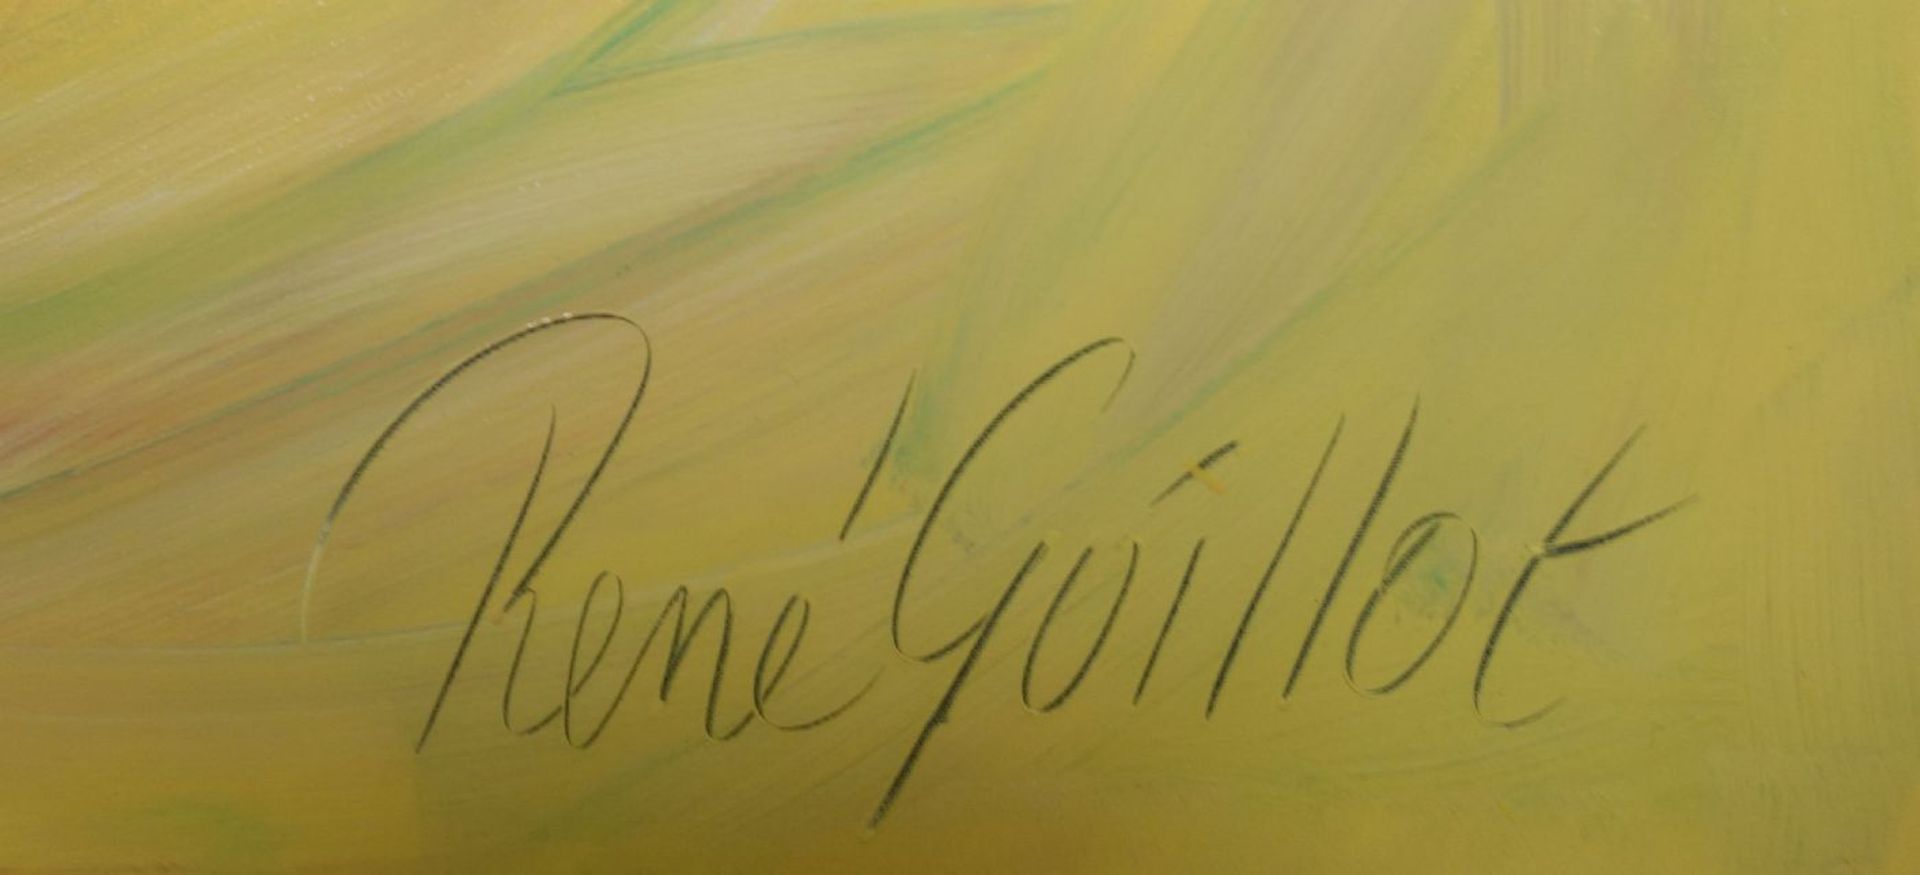 GUILLOT, RENÉ (1900-1969), Gemälde / painting: "Abstrakte Komposition", Öl auf Leinwand / oil on - Bild 2 aus 4